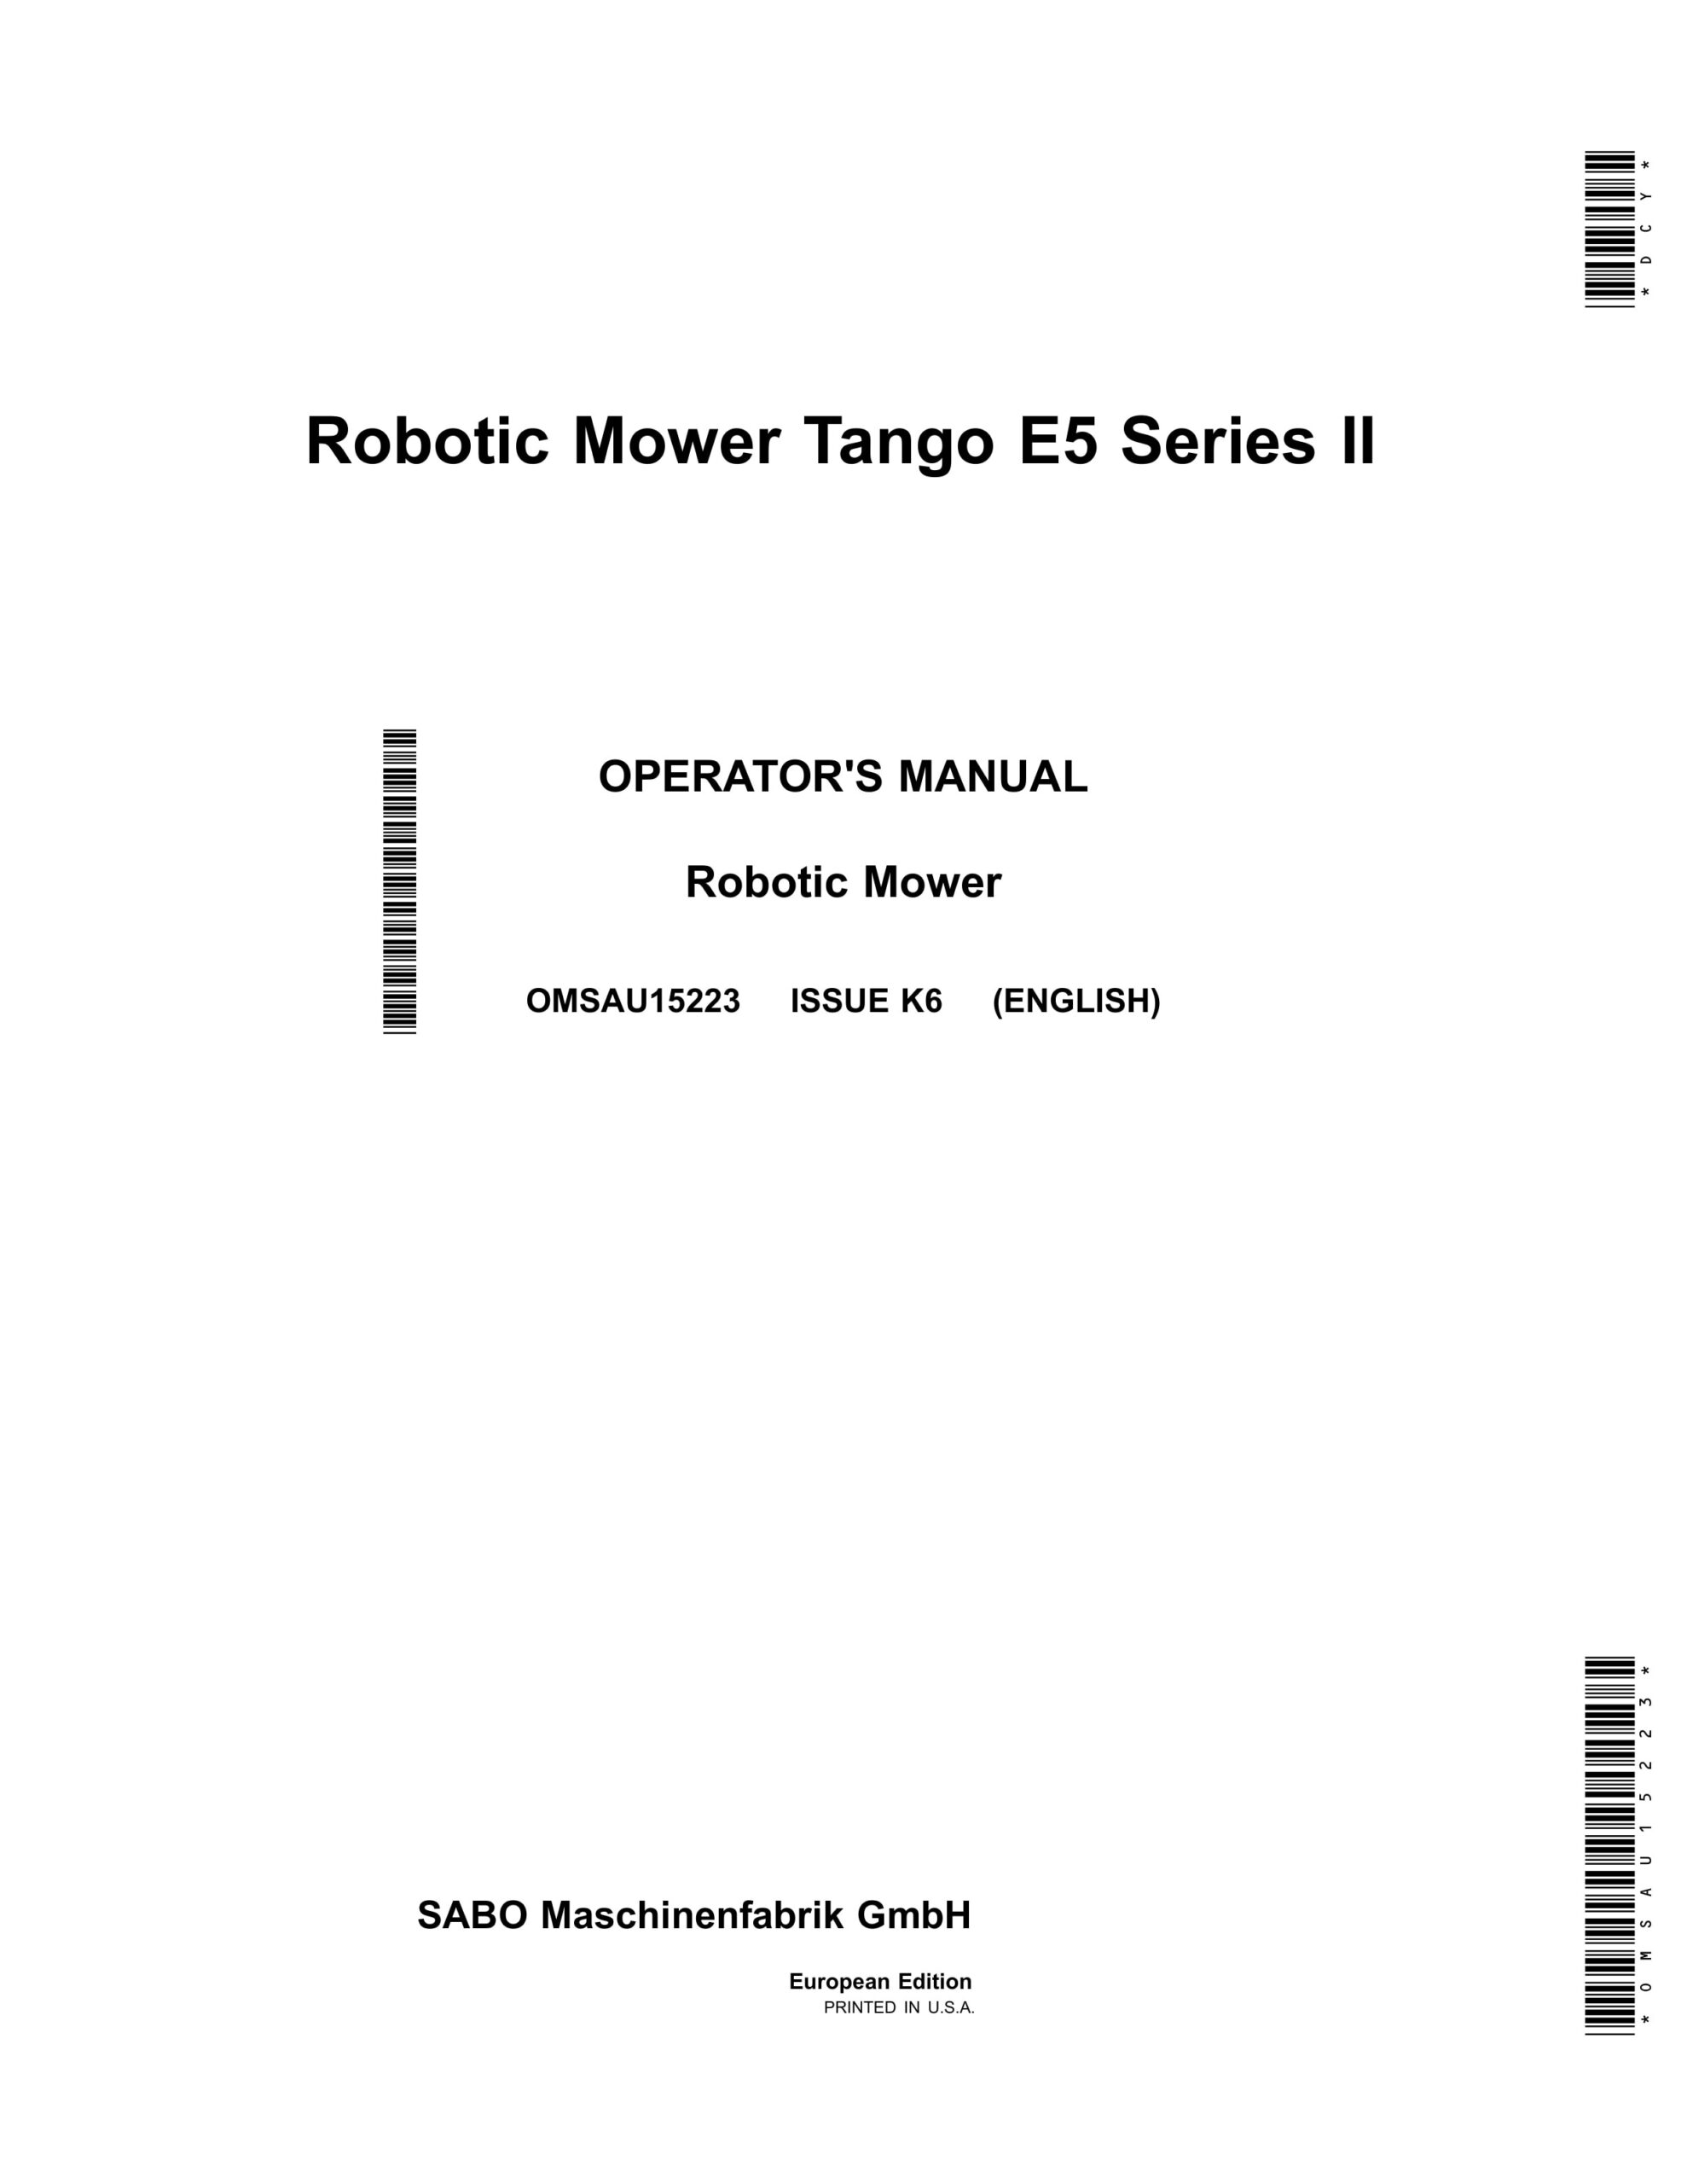 John Deere Tango E5 Series II Robotic Mower Operator Manual OMSAU15223-1